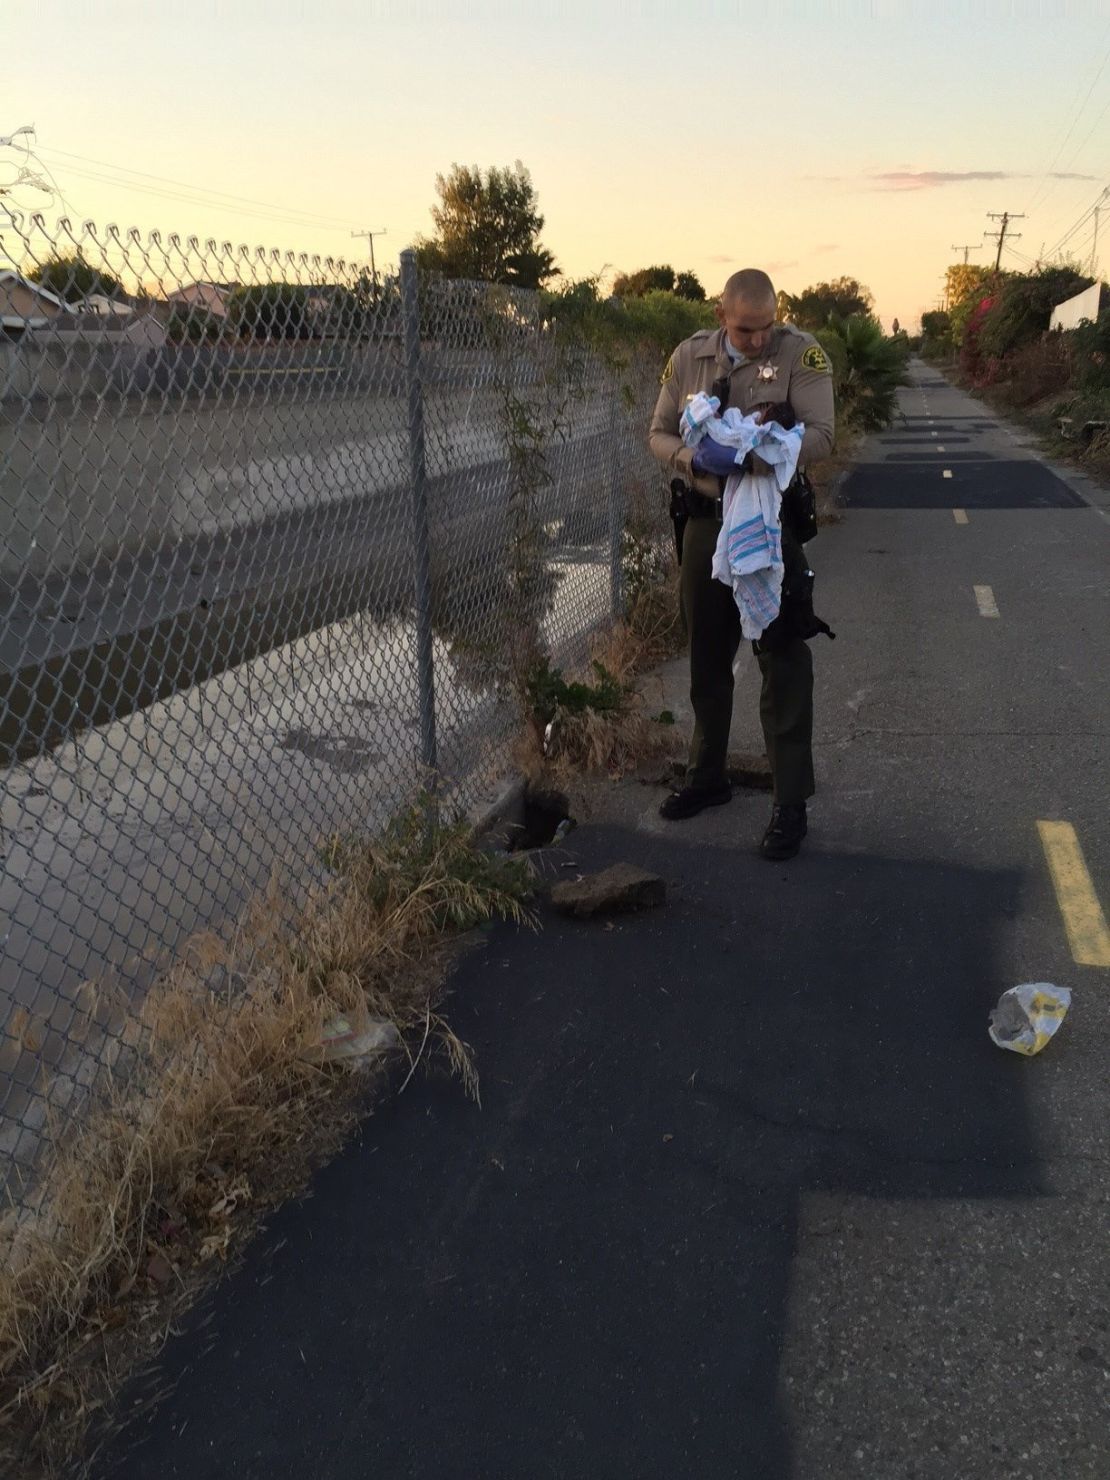 Newborn was found under asphalt along popular Compton walking path 